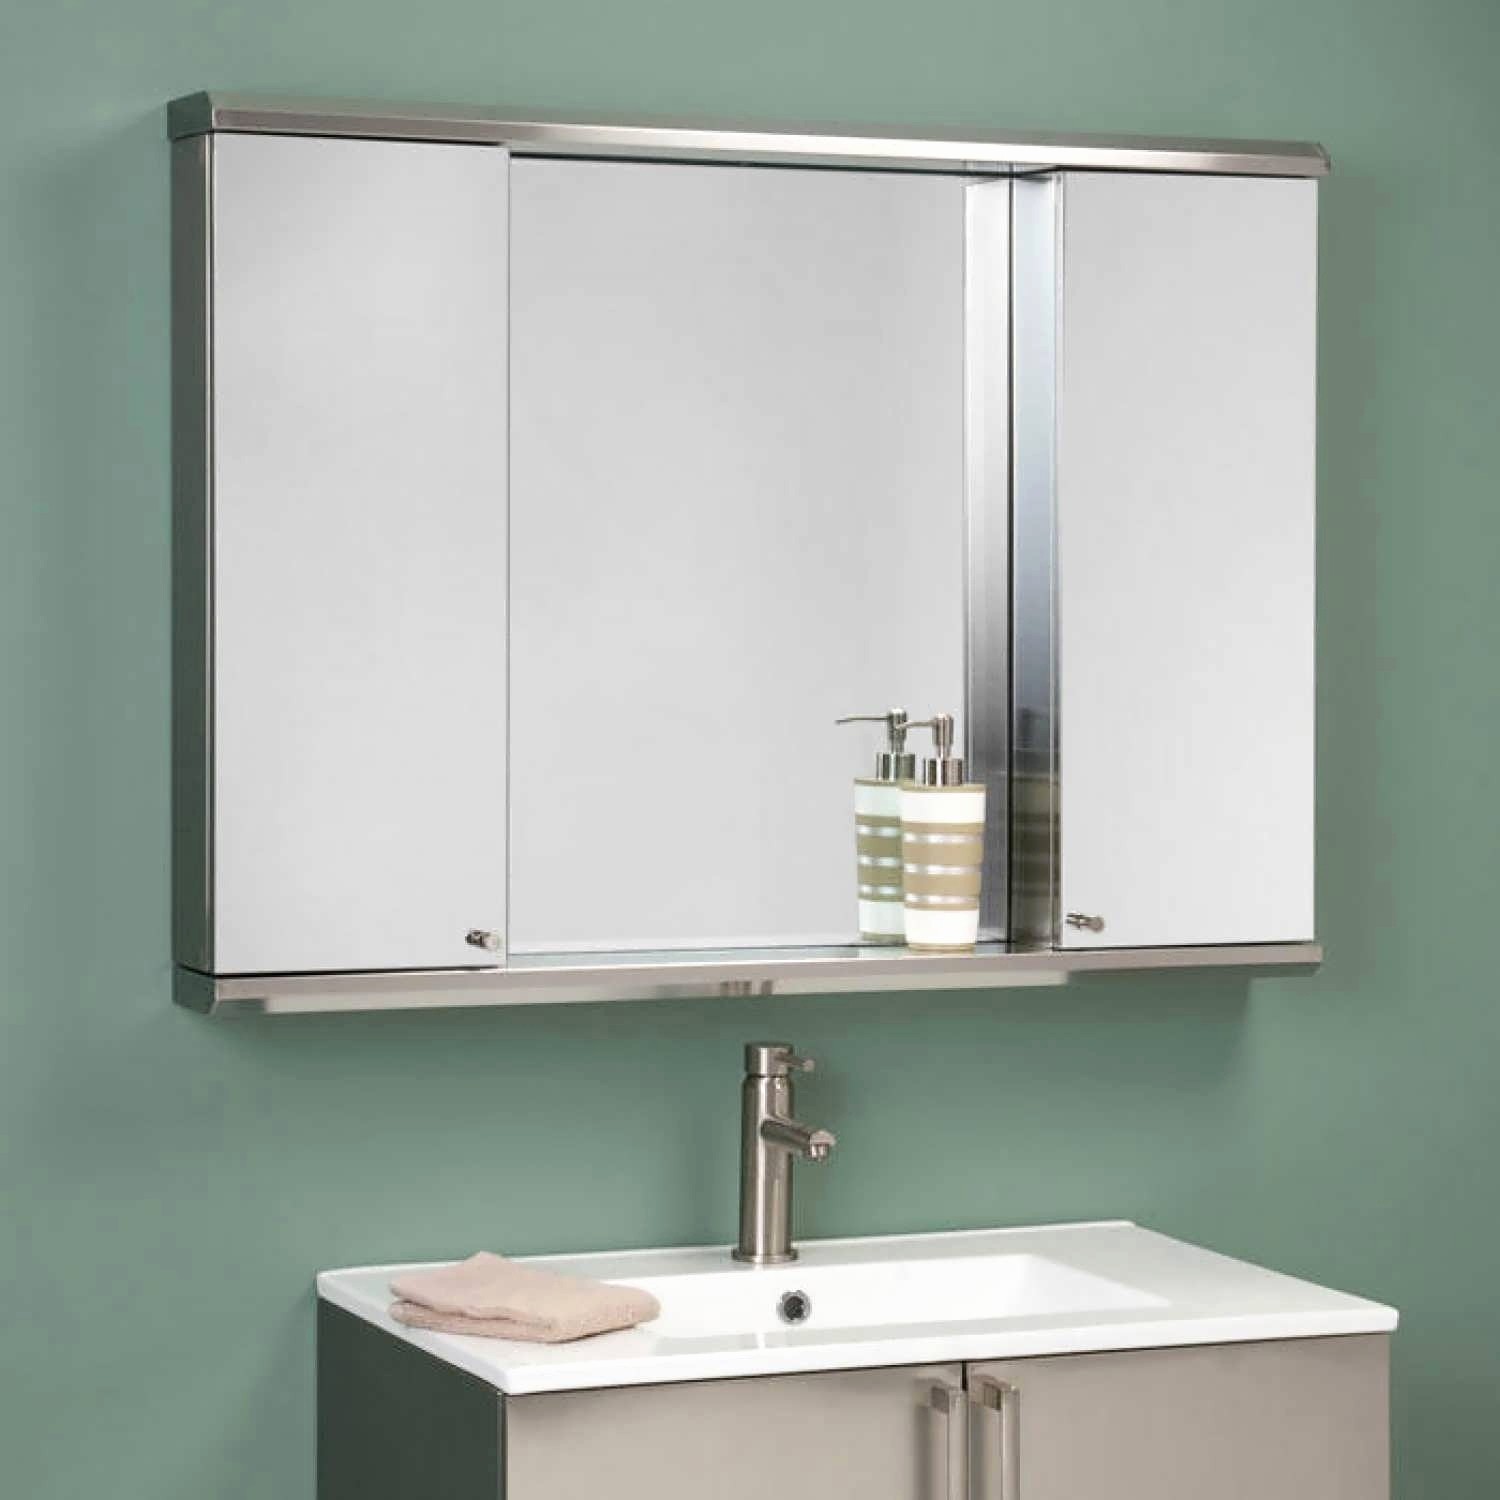 Bathroom Mirror Light Fresh Amazing Bathroom Design New Luxury Shower Light H Sink Install I 0d